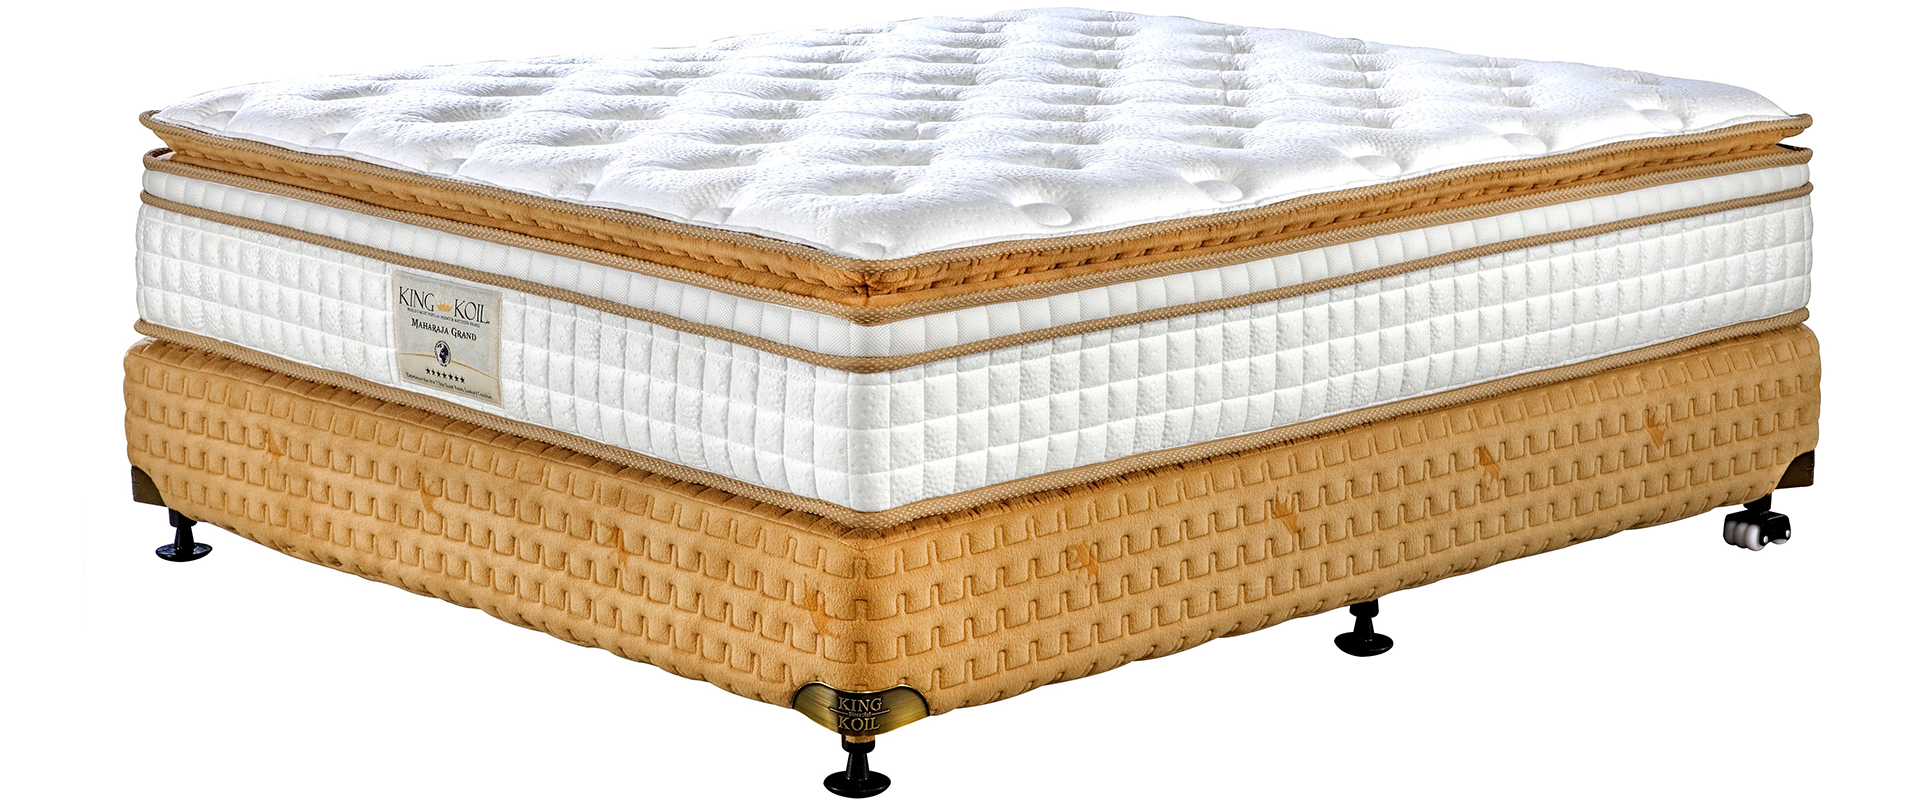 king koil memory foam mattress prices